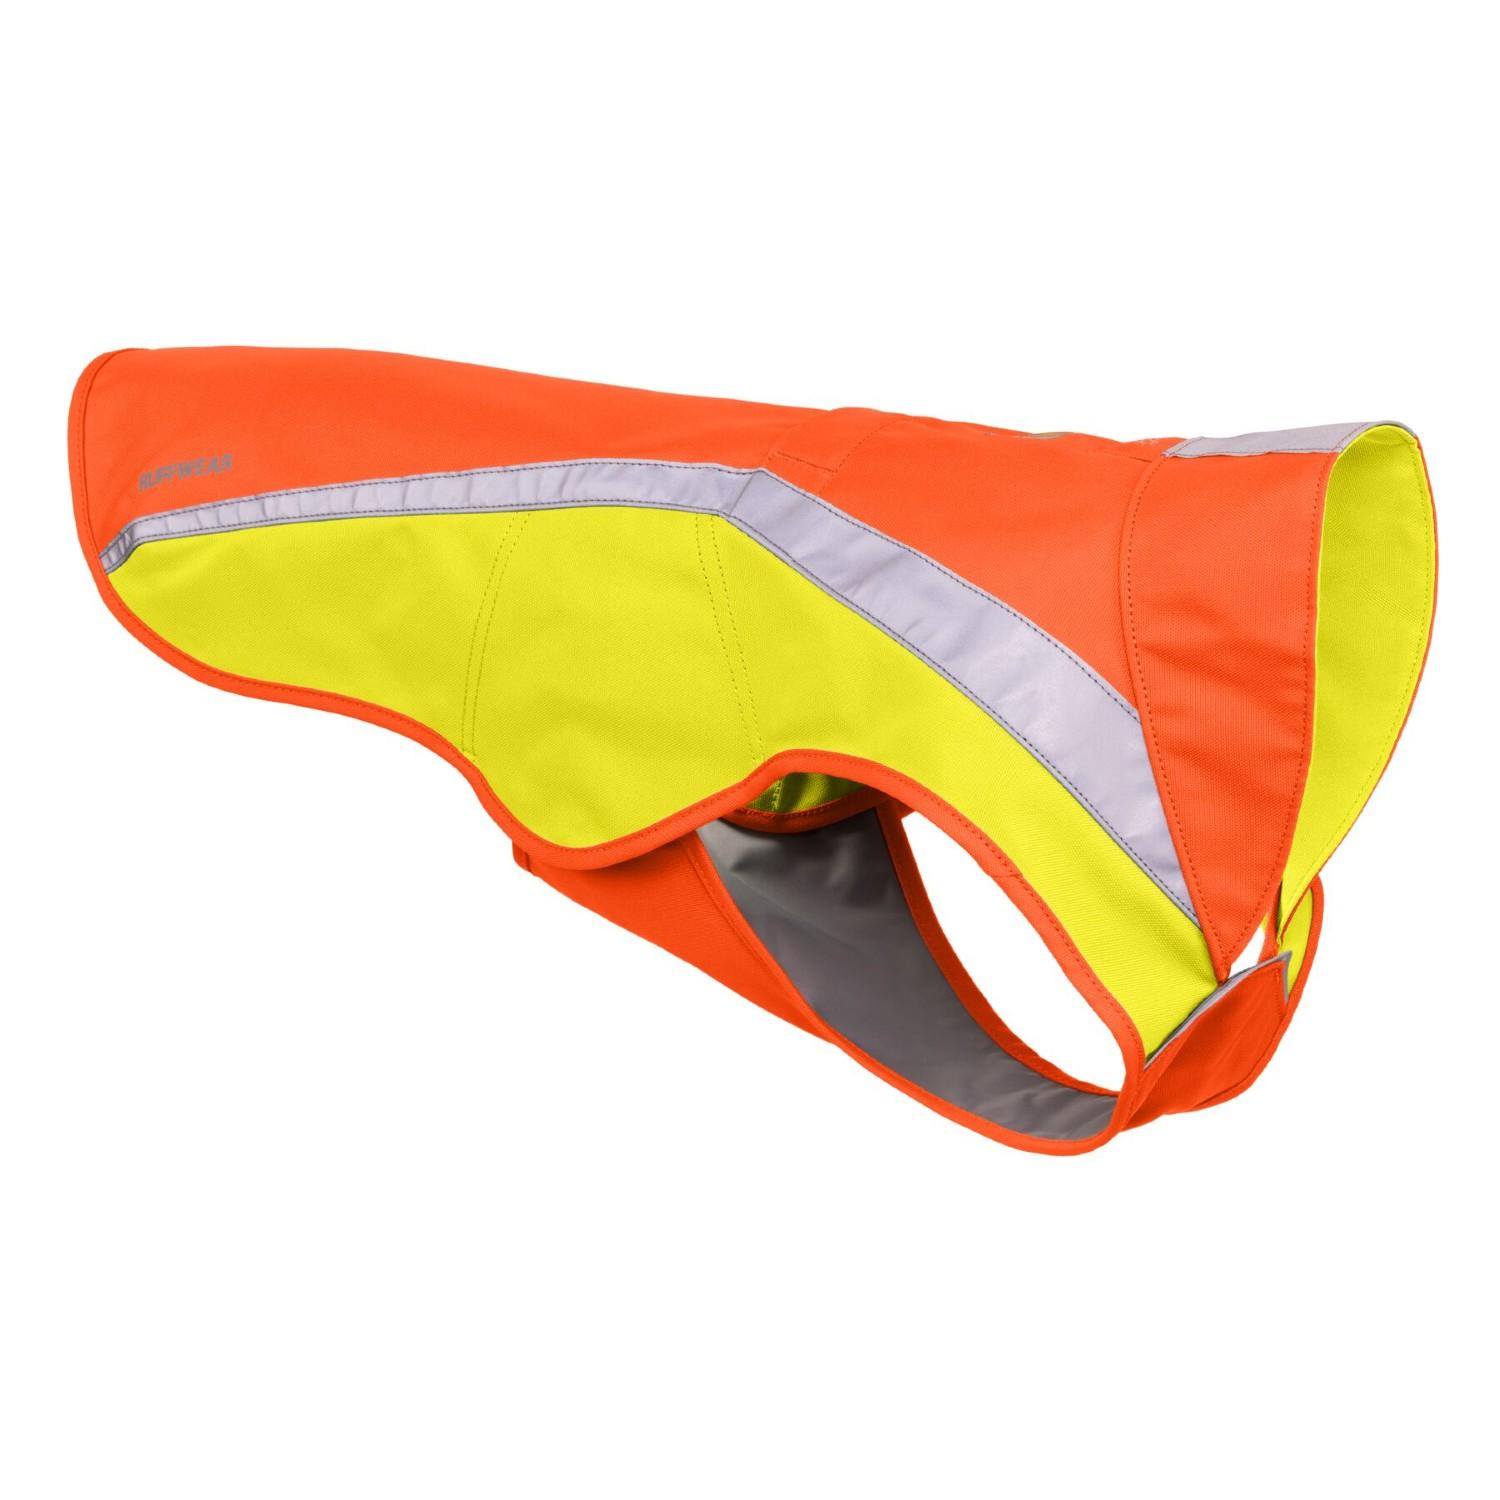 Lumenglow High-Vis Dog Jacket by RuffWear - Blaze Orange